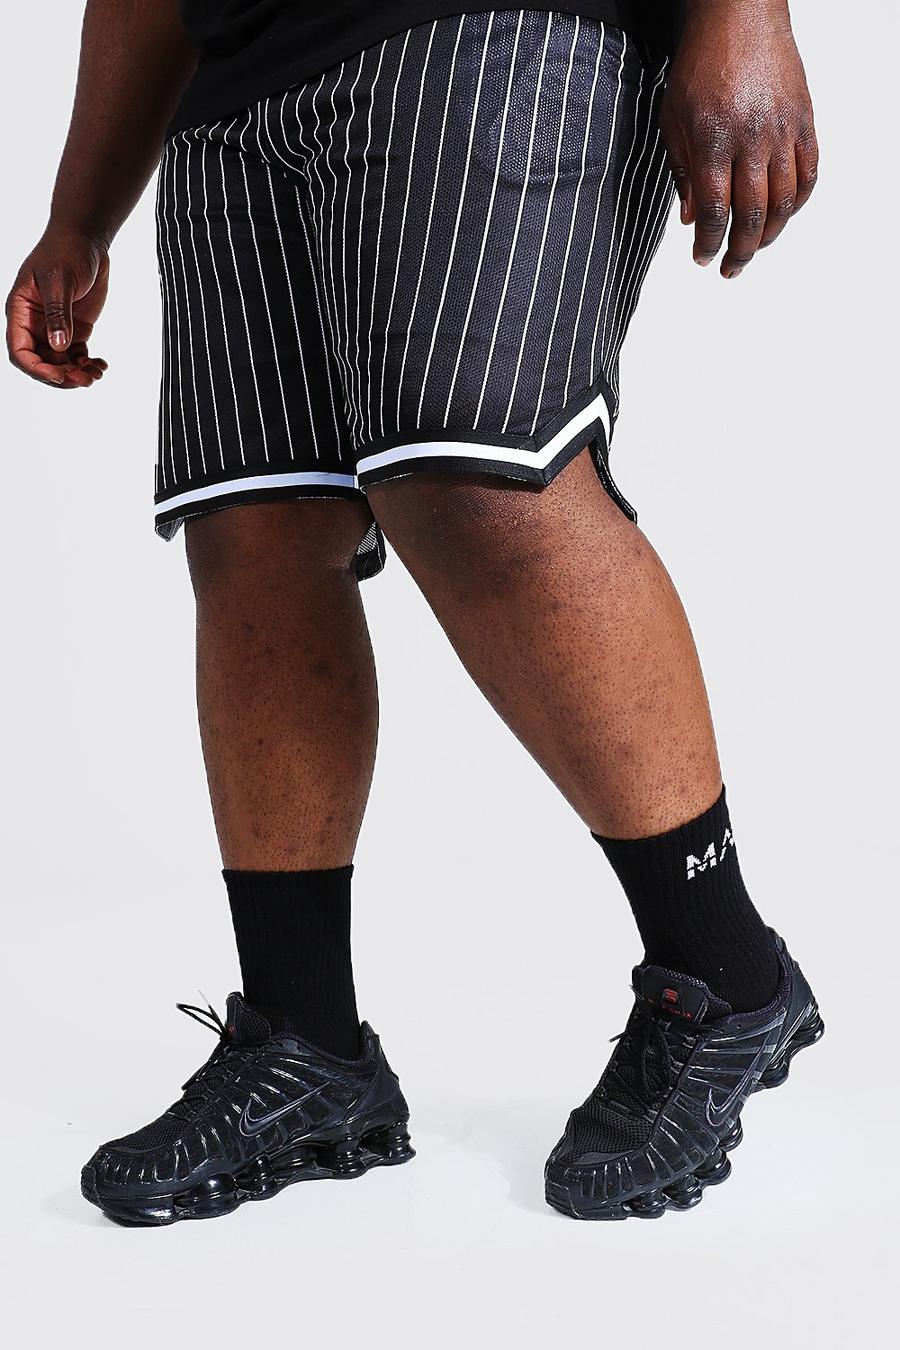 Pantalones cortos de baloncesto de malla a rayas diplomáticas Plus, Negro image number 1